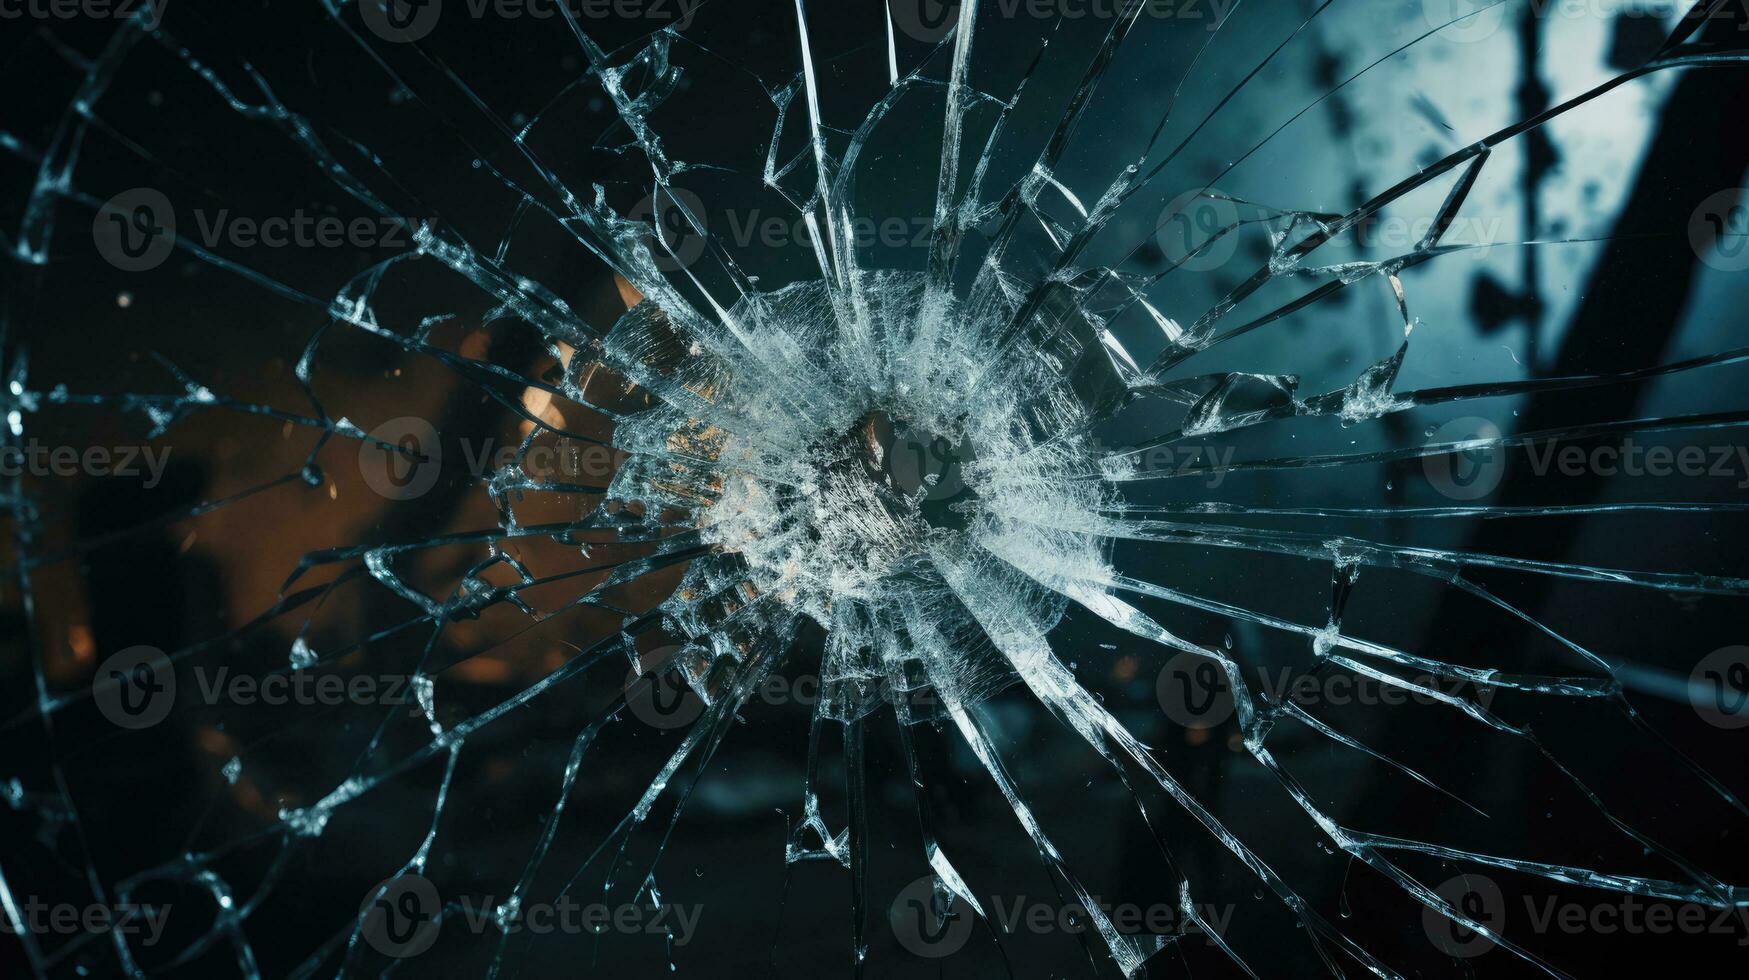 bala orifício vidro abstrato fundo - crime arma de fogo tiro foto